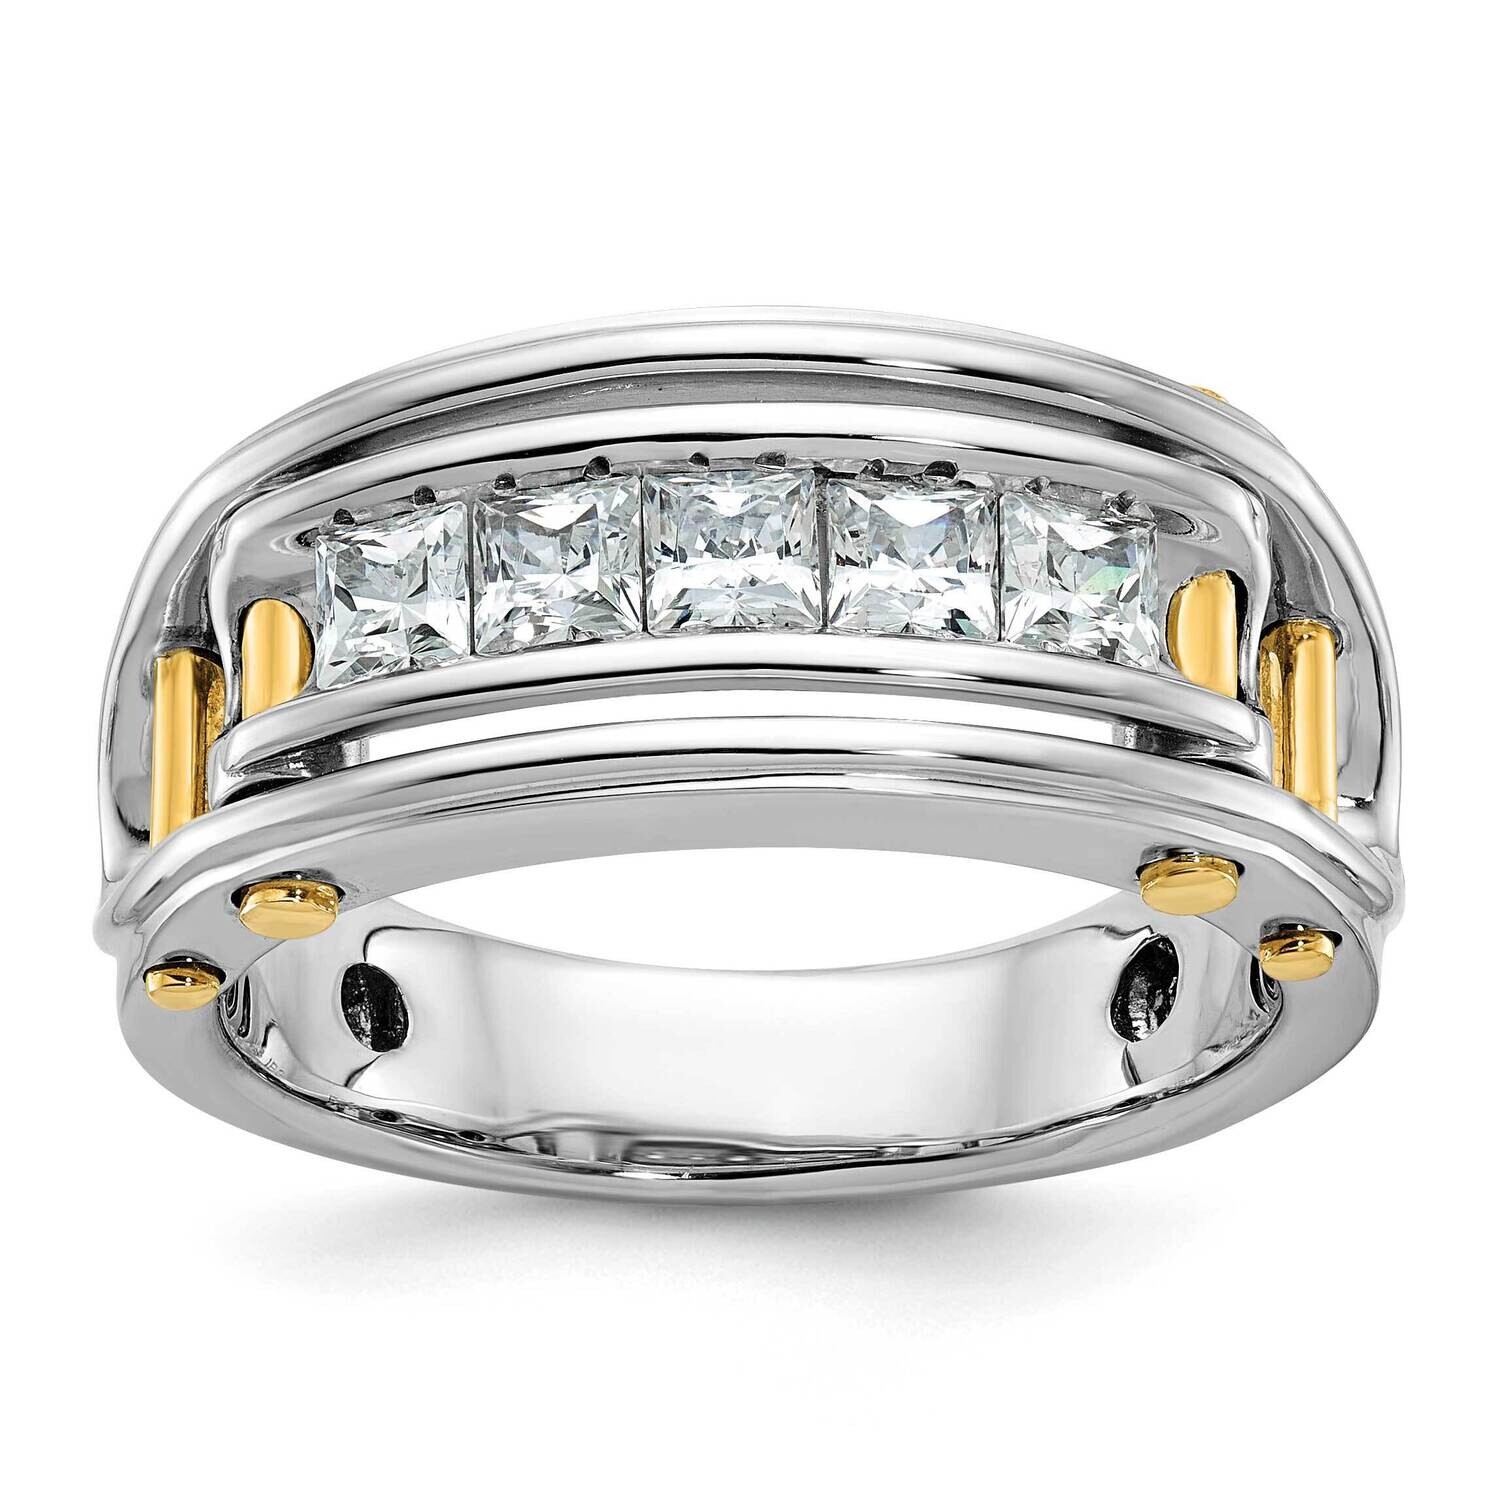 Ibgoodman Men's Polished Cut-Out 5-Stone 1 Carat Aa Quality Square Diamond Ring 14k Two-Tone Gold B64086-4WYAA